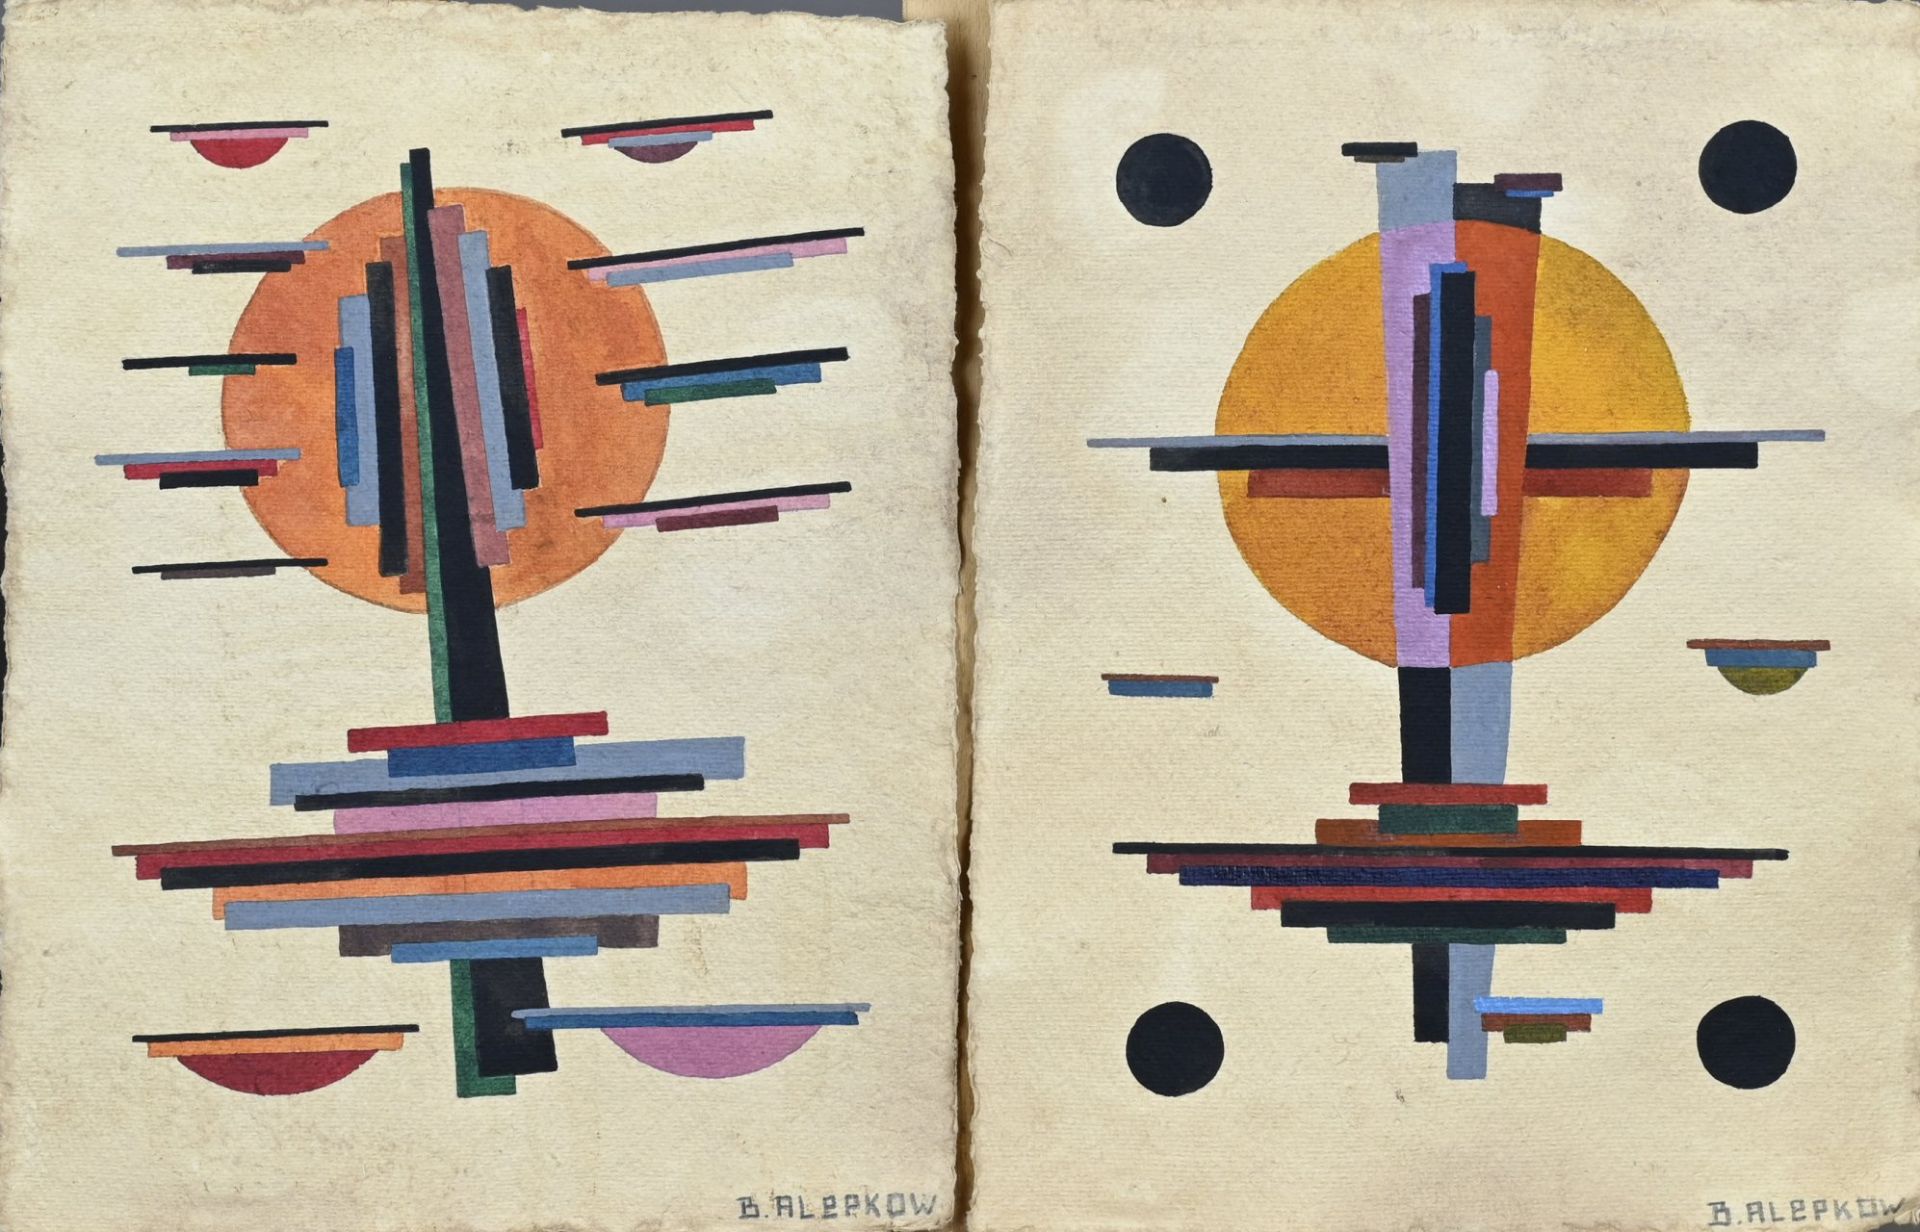 2x B. Alepkow, Avant-garde painting